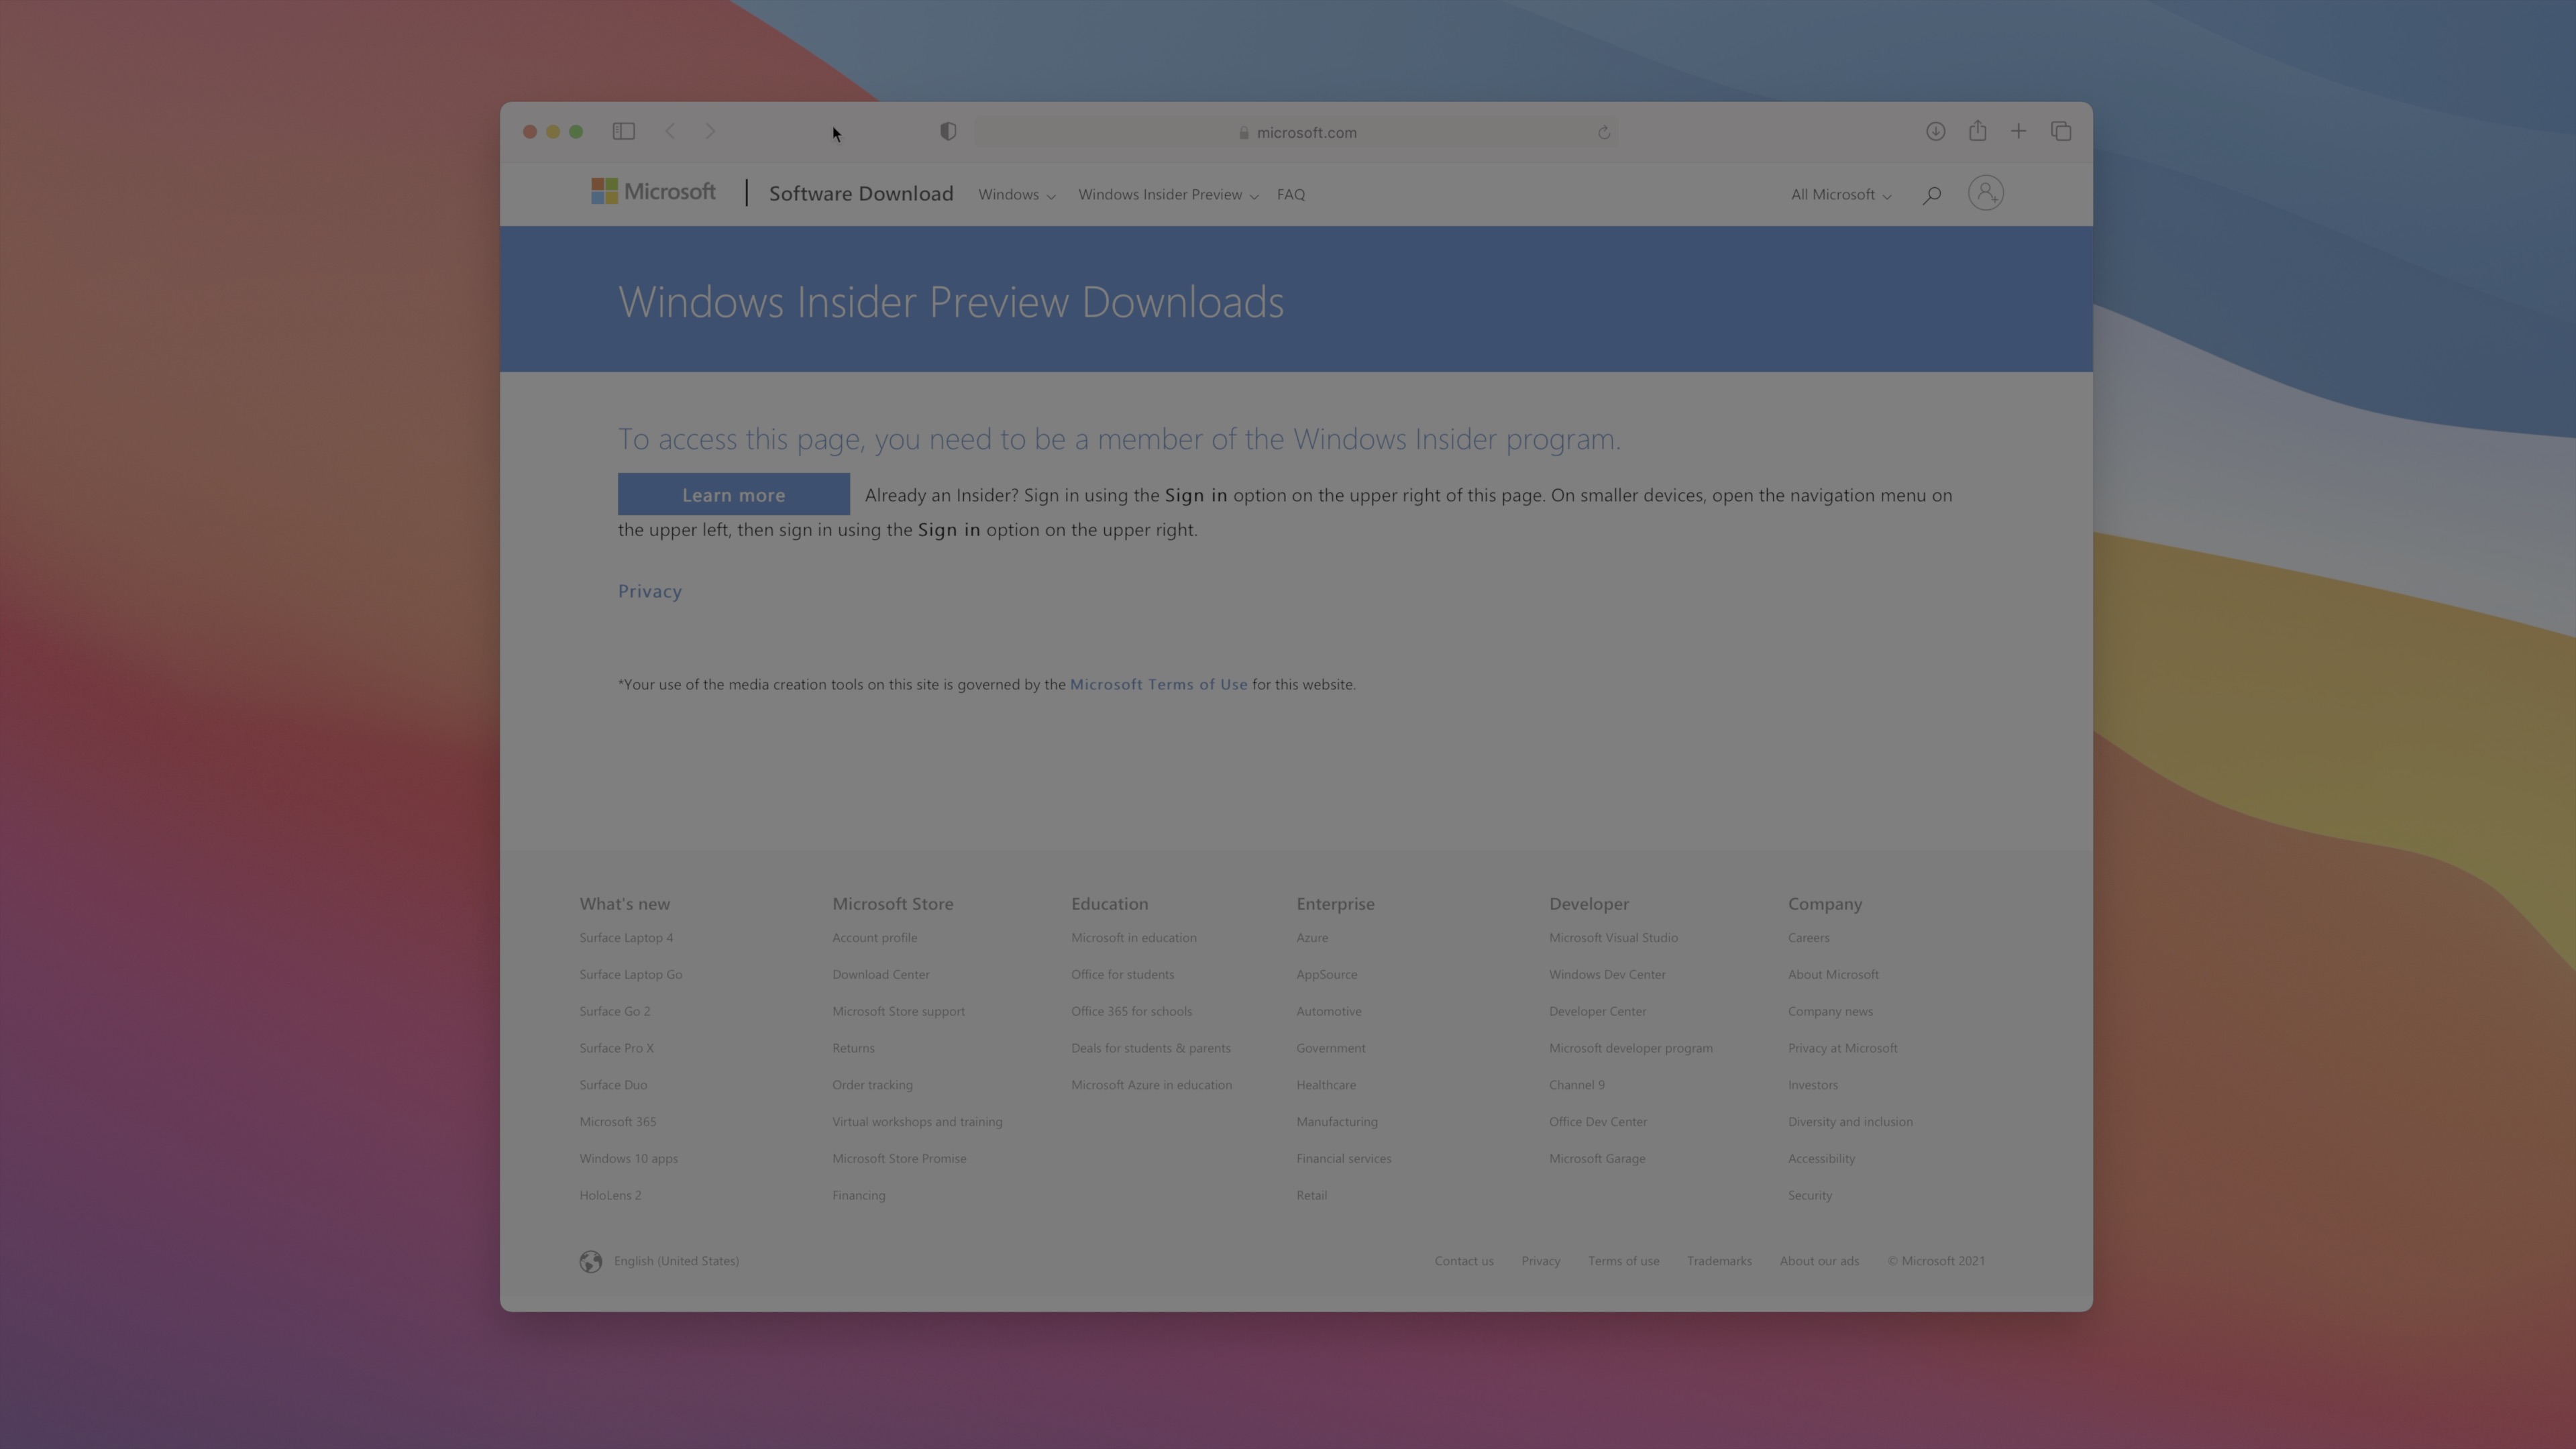 Register as a Windows Insider